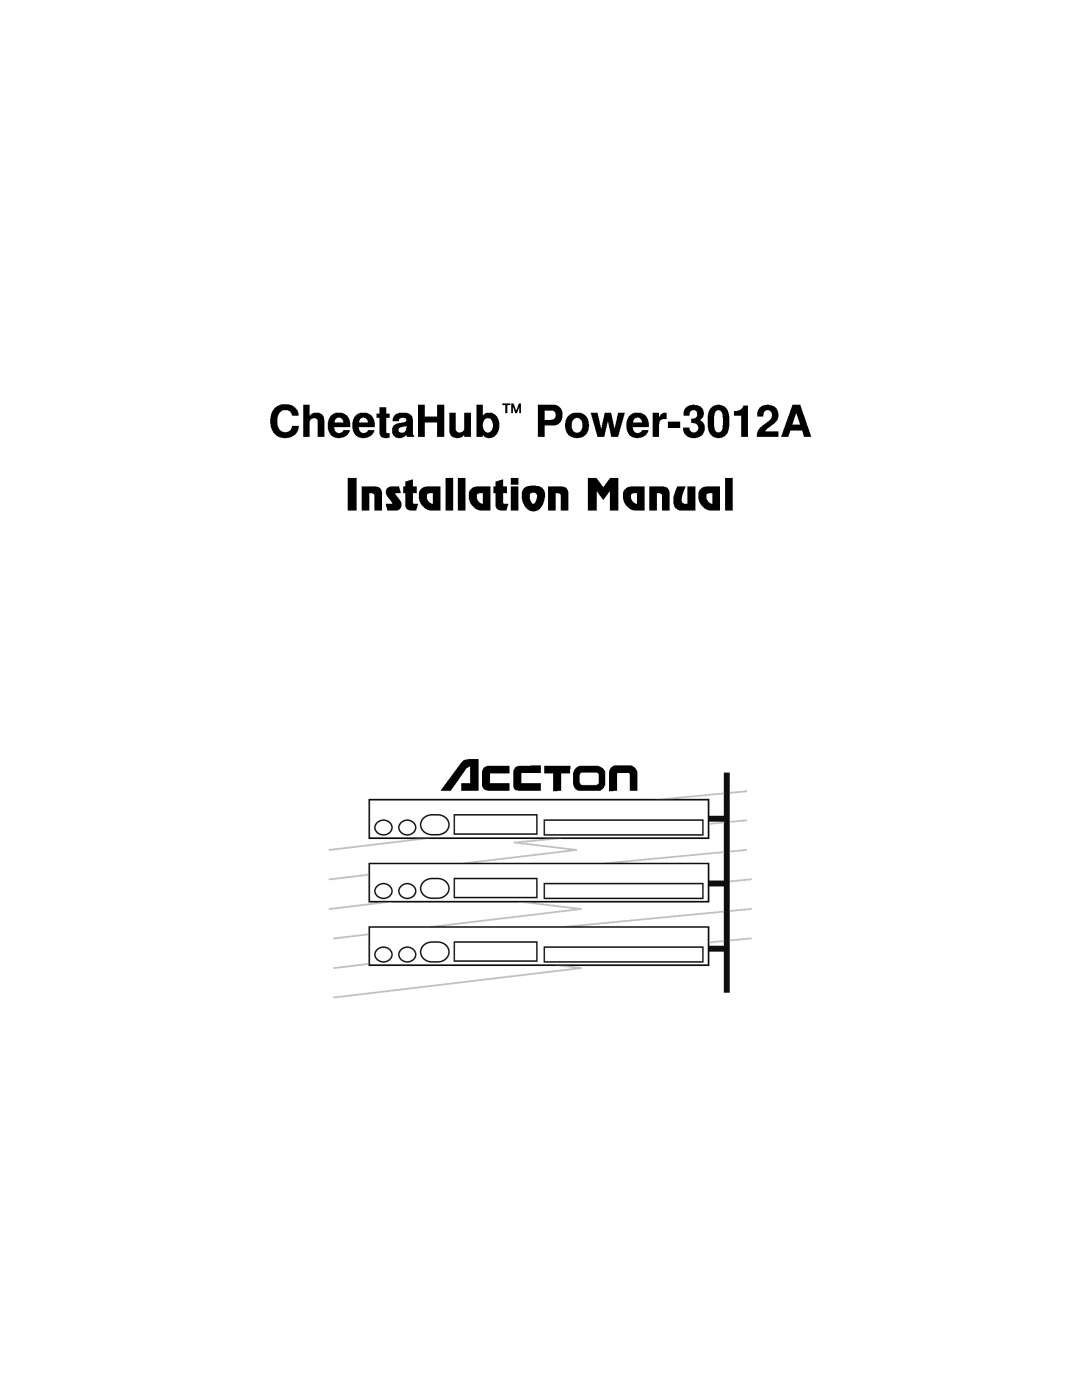 Accton Technology POWER-3012A manual CheetaHub Power-3012A, Inoggodji*Ipg 